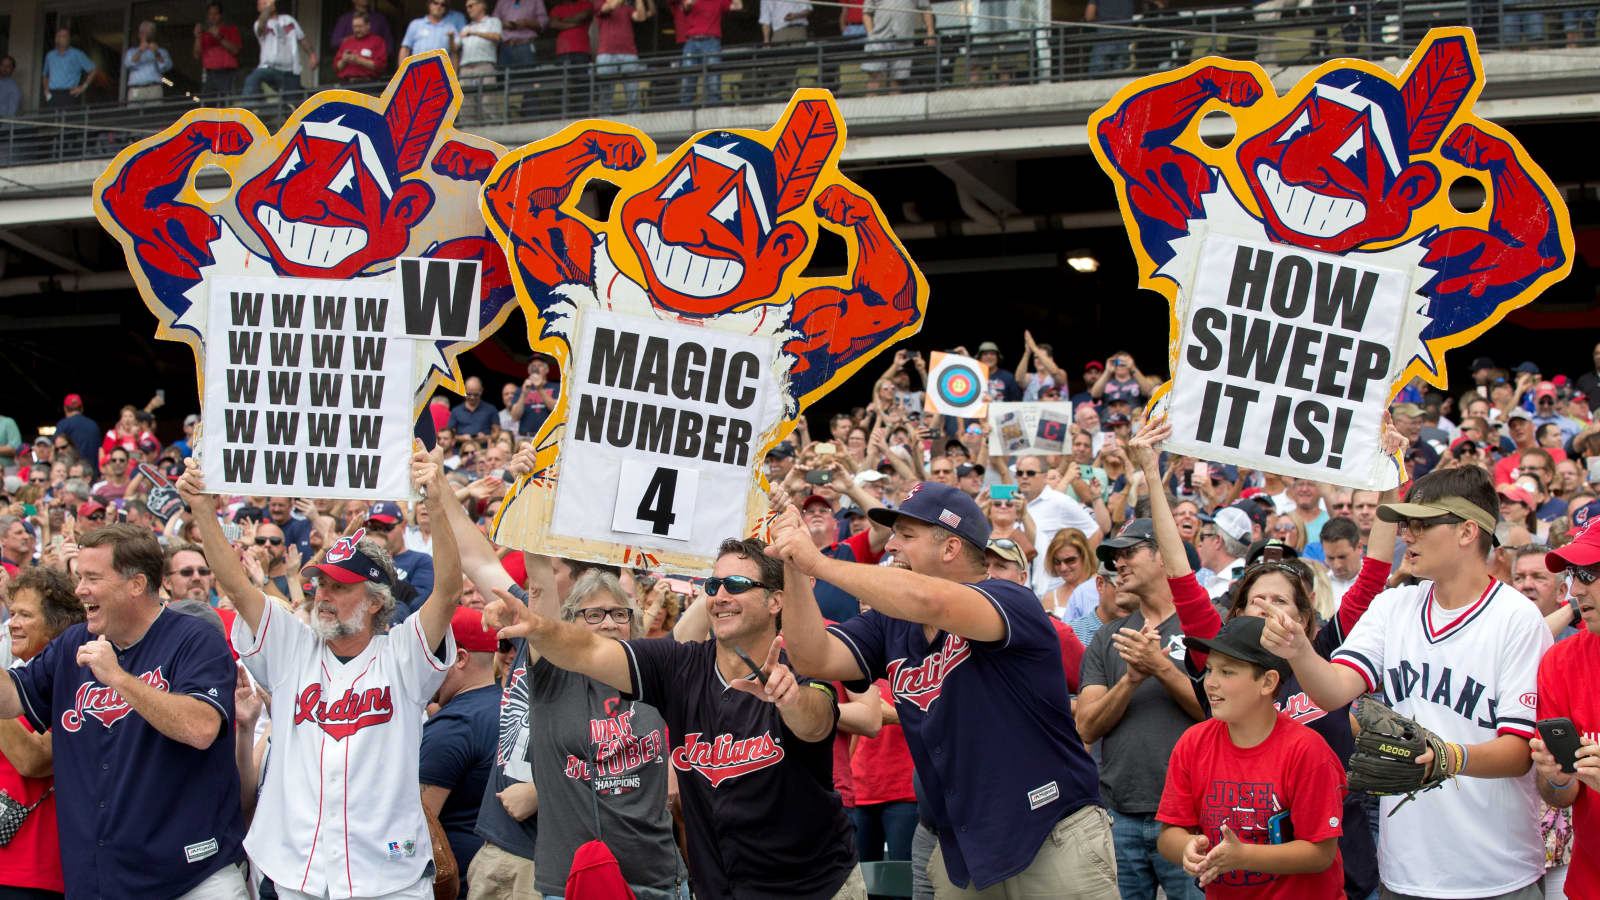 Cleveland Indians break American League record, but stadium still